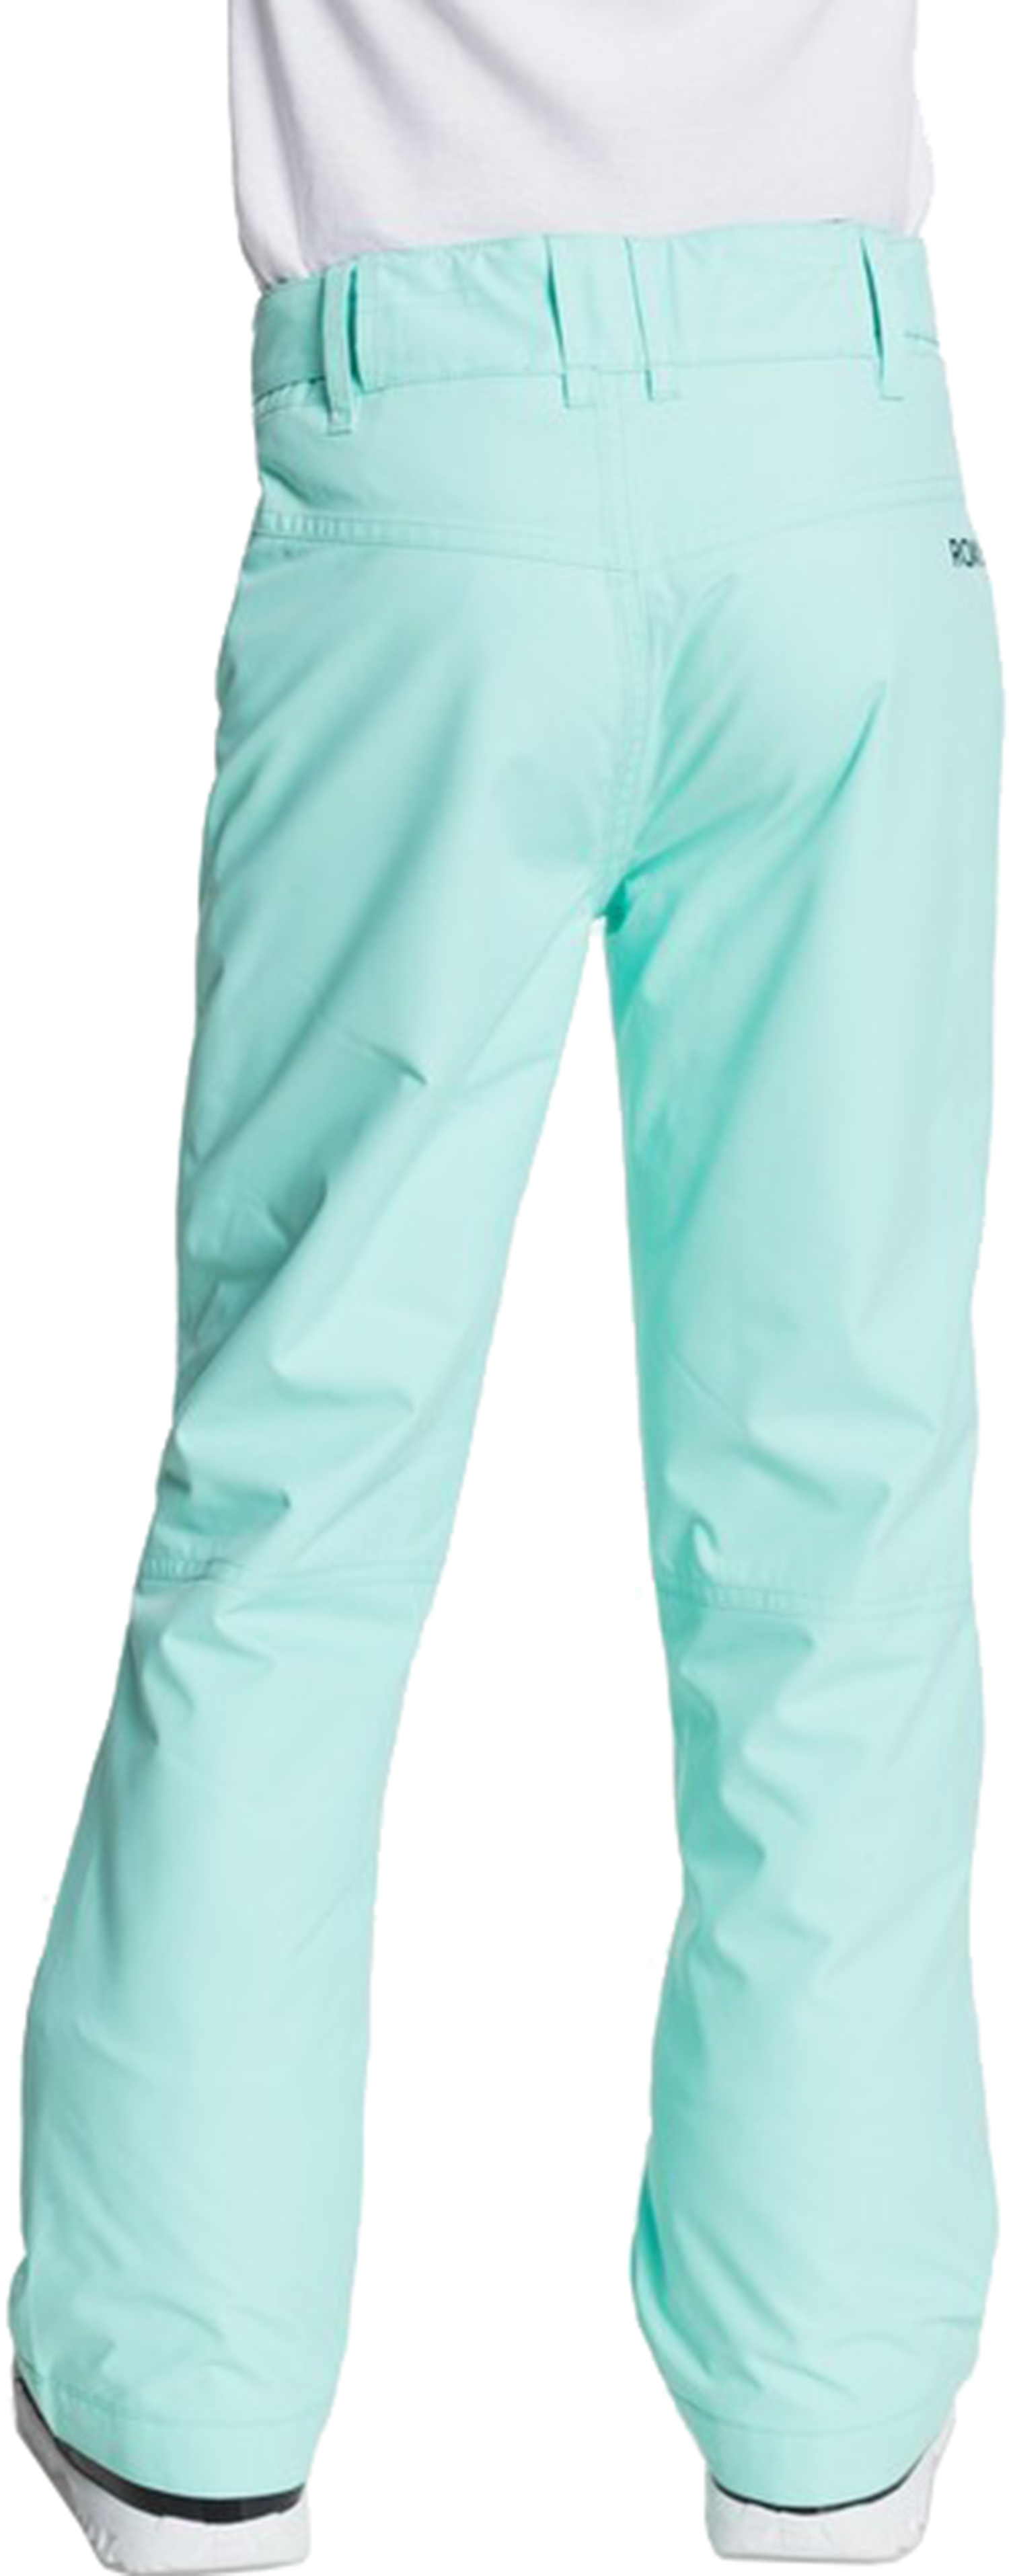 Штаны для сноуборда Roxy ERJTP03091 Backyard Harbor Gray, цвет белый-зеленый, размер S BFR0 - фото 2